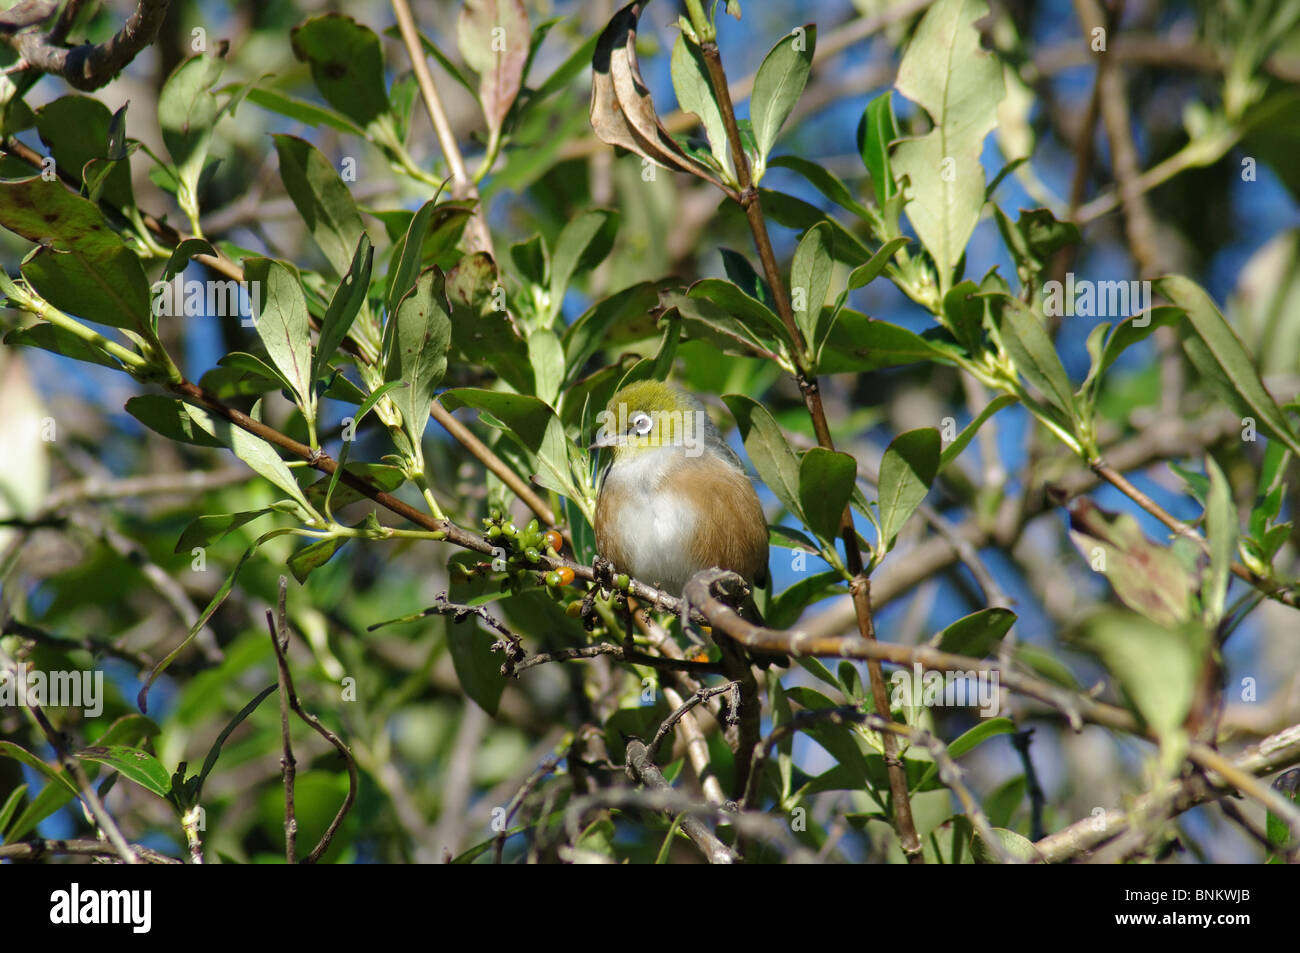 New Zealand Silvereye Bird on Karamu shrub with ripe fruit Stock Photo